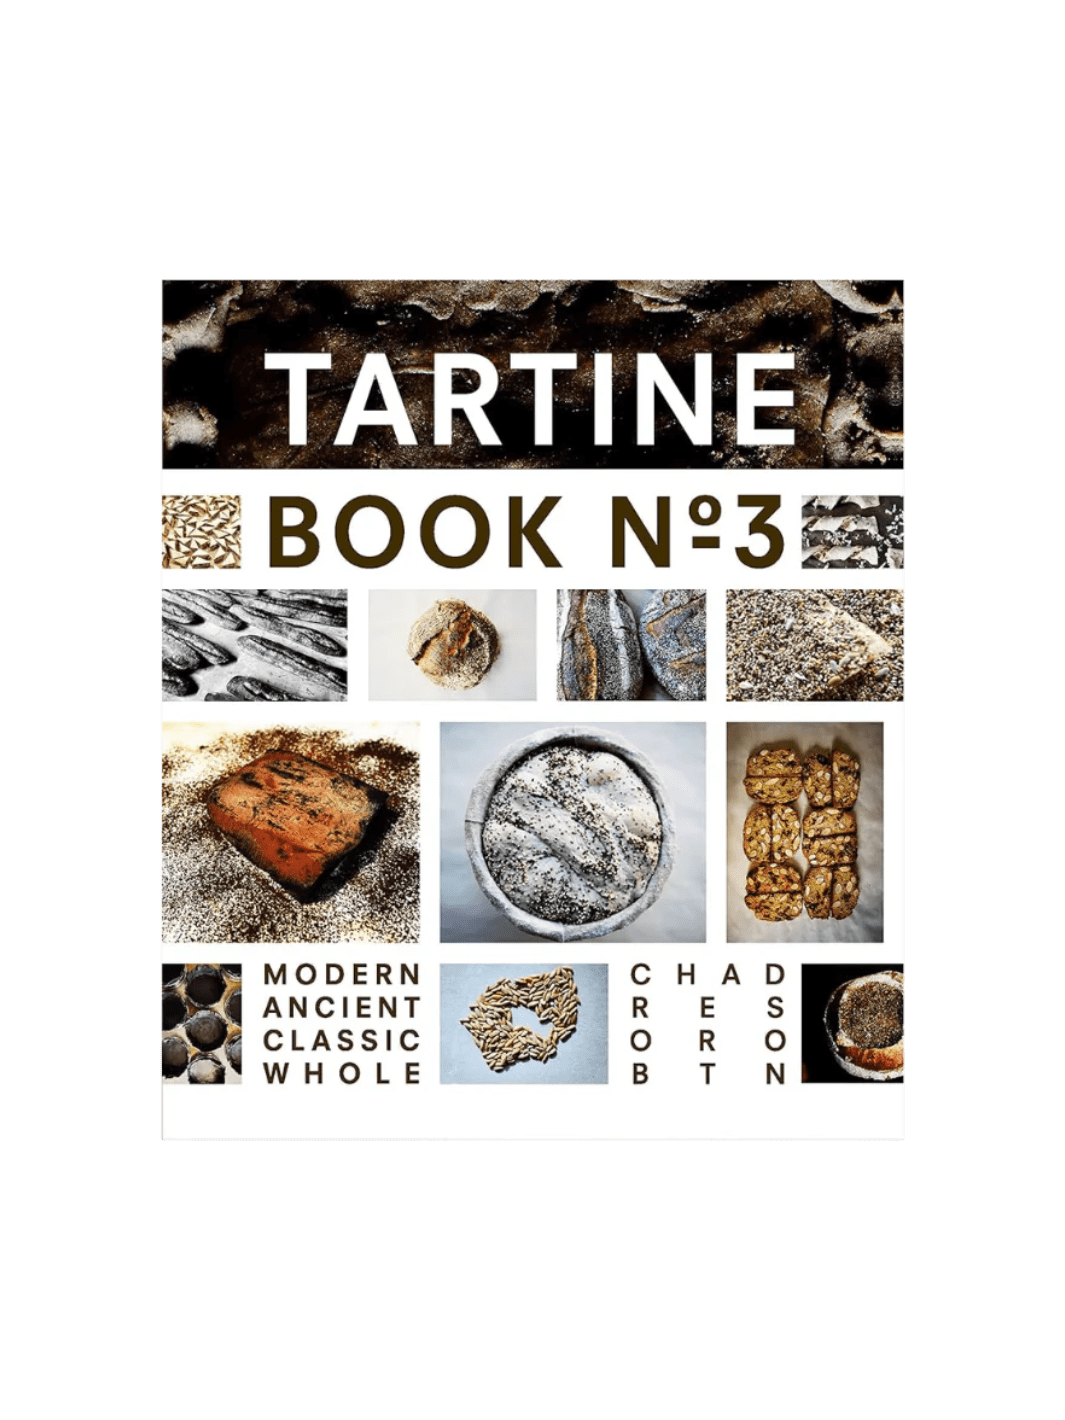 Tartine Book No. 3: Ancient Modern Classic Whole by Chad Robertson | Twentyseven Toronto